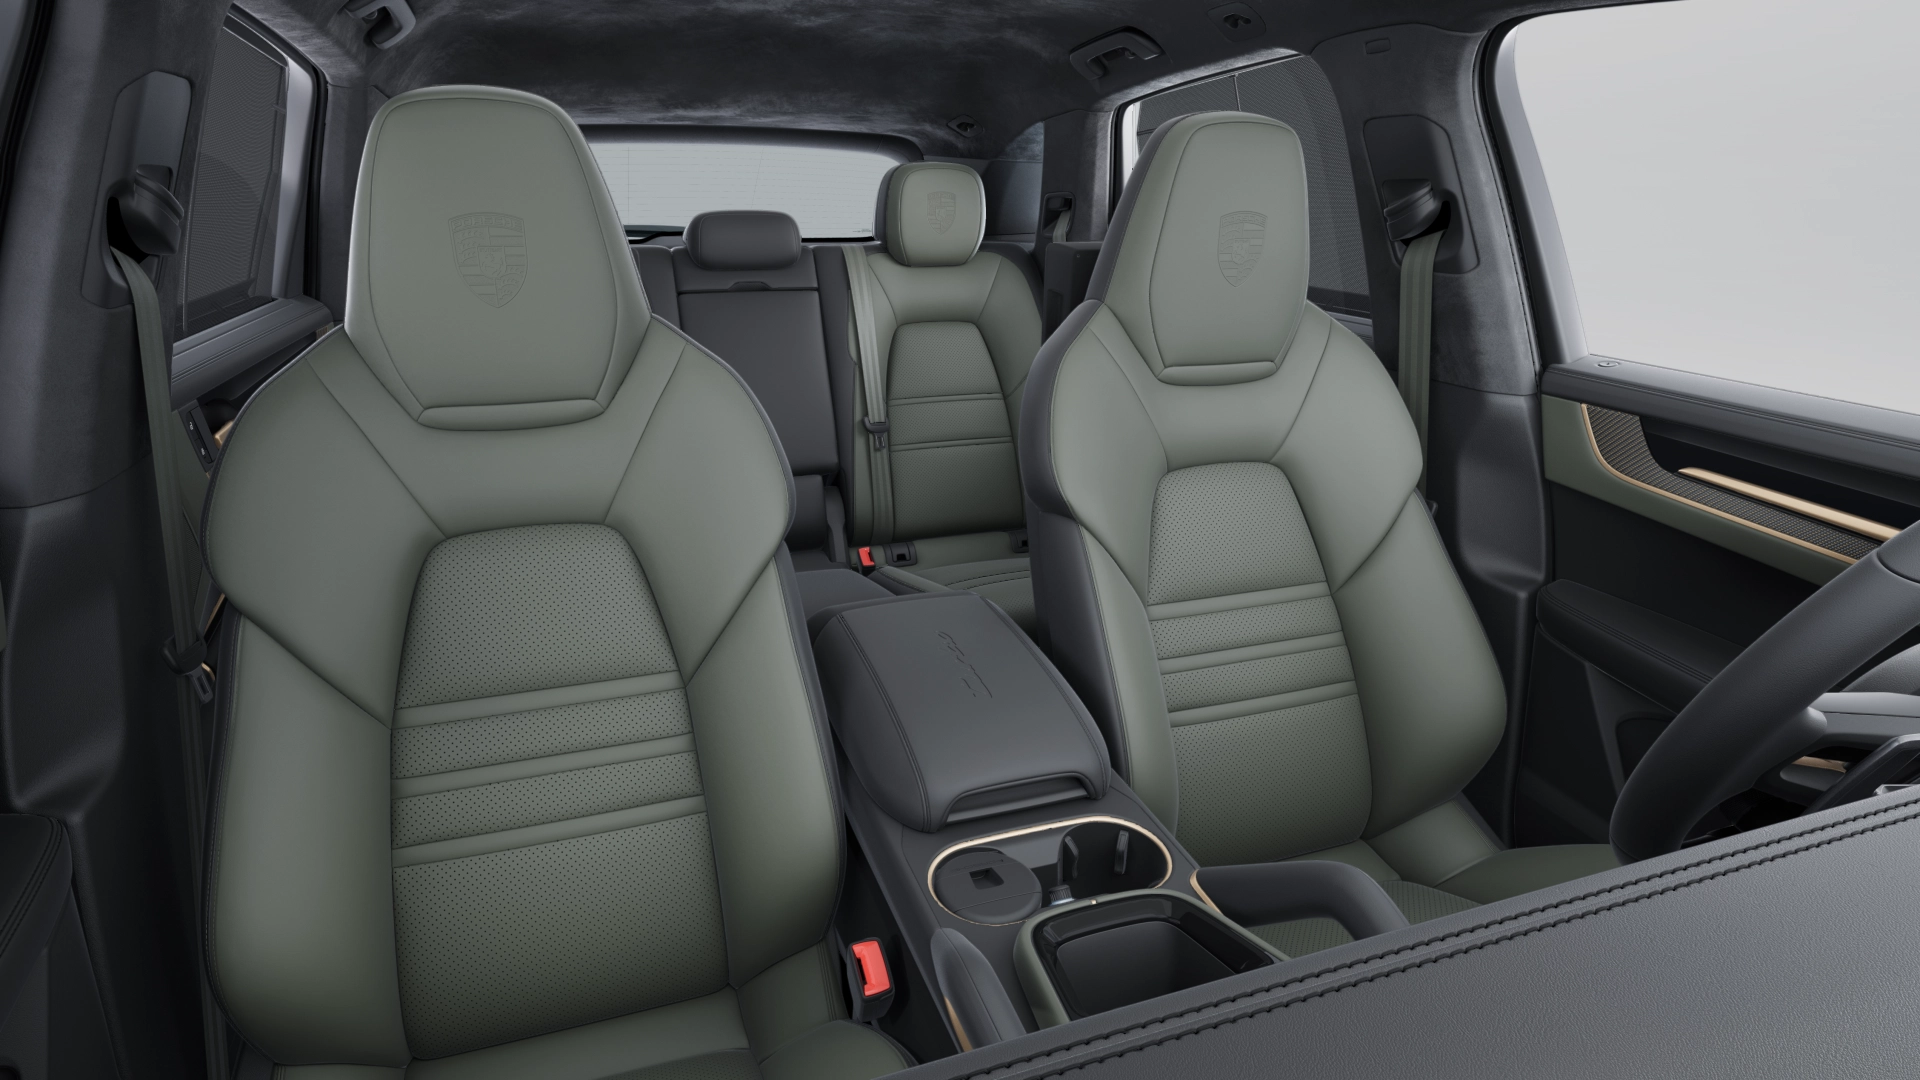 Cayenne Turbo E-Hybrid interior view